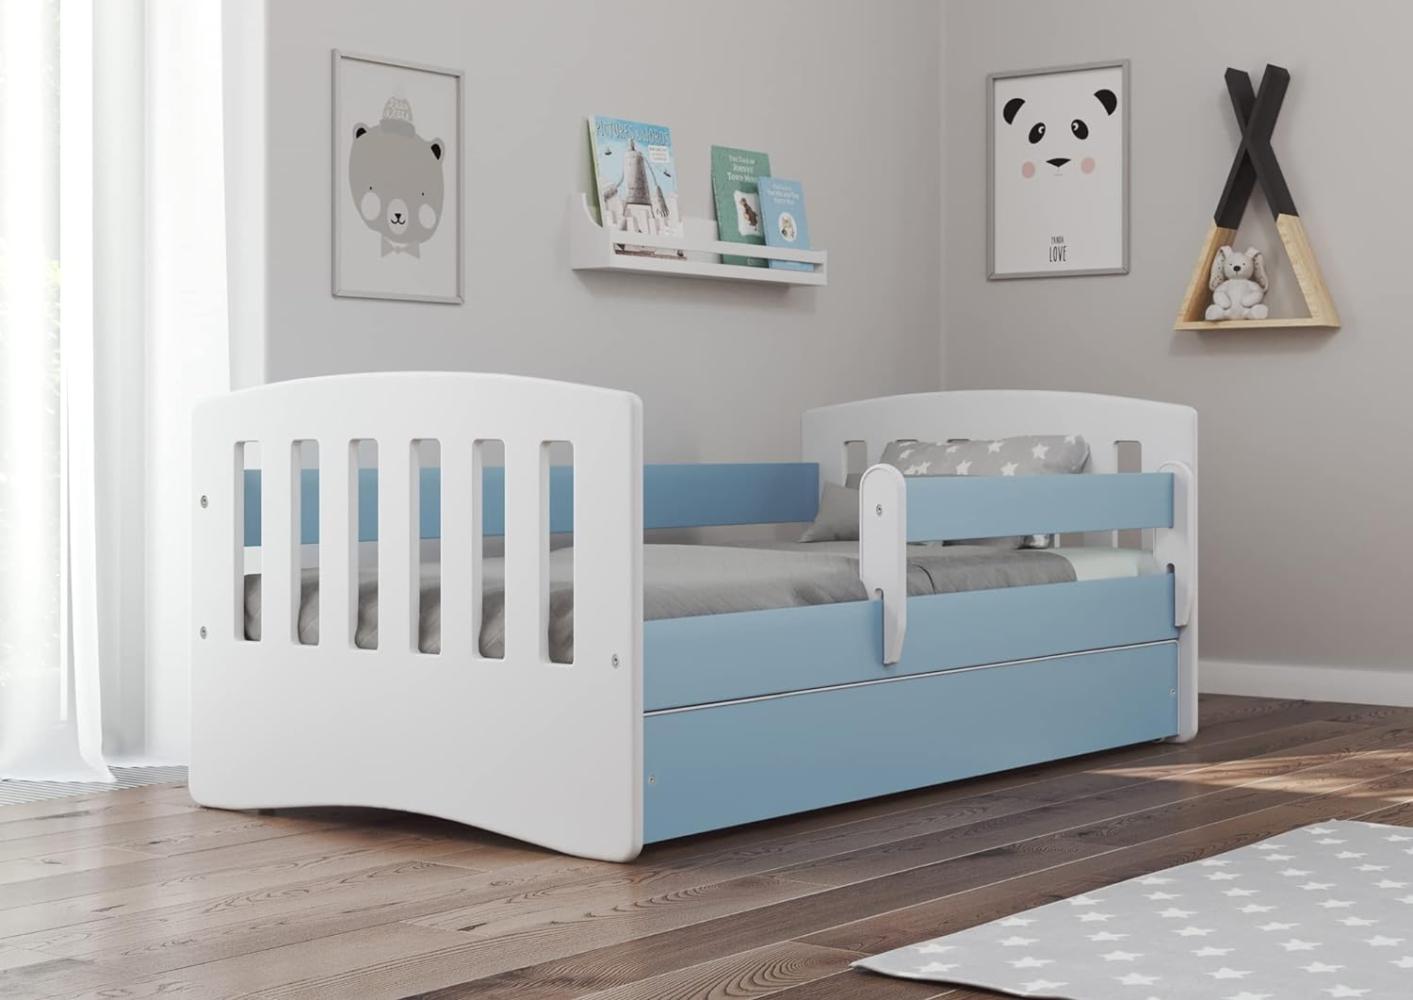 Bjird 'Classic' Kinderbett 80 x 180 cm, Blau, inkl. Rausfallschutz, Lattenrost und Bettschublade Bild 1